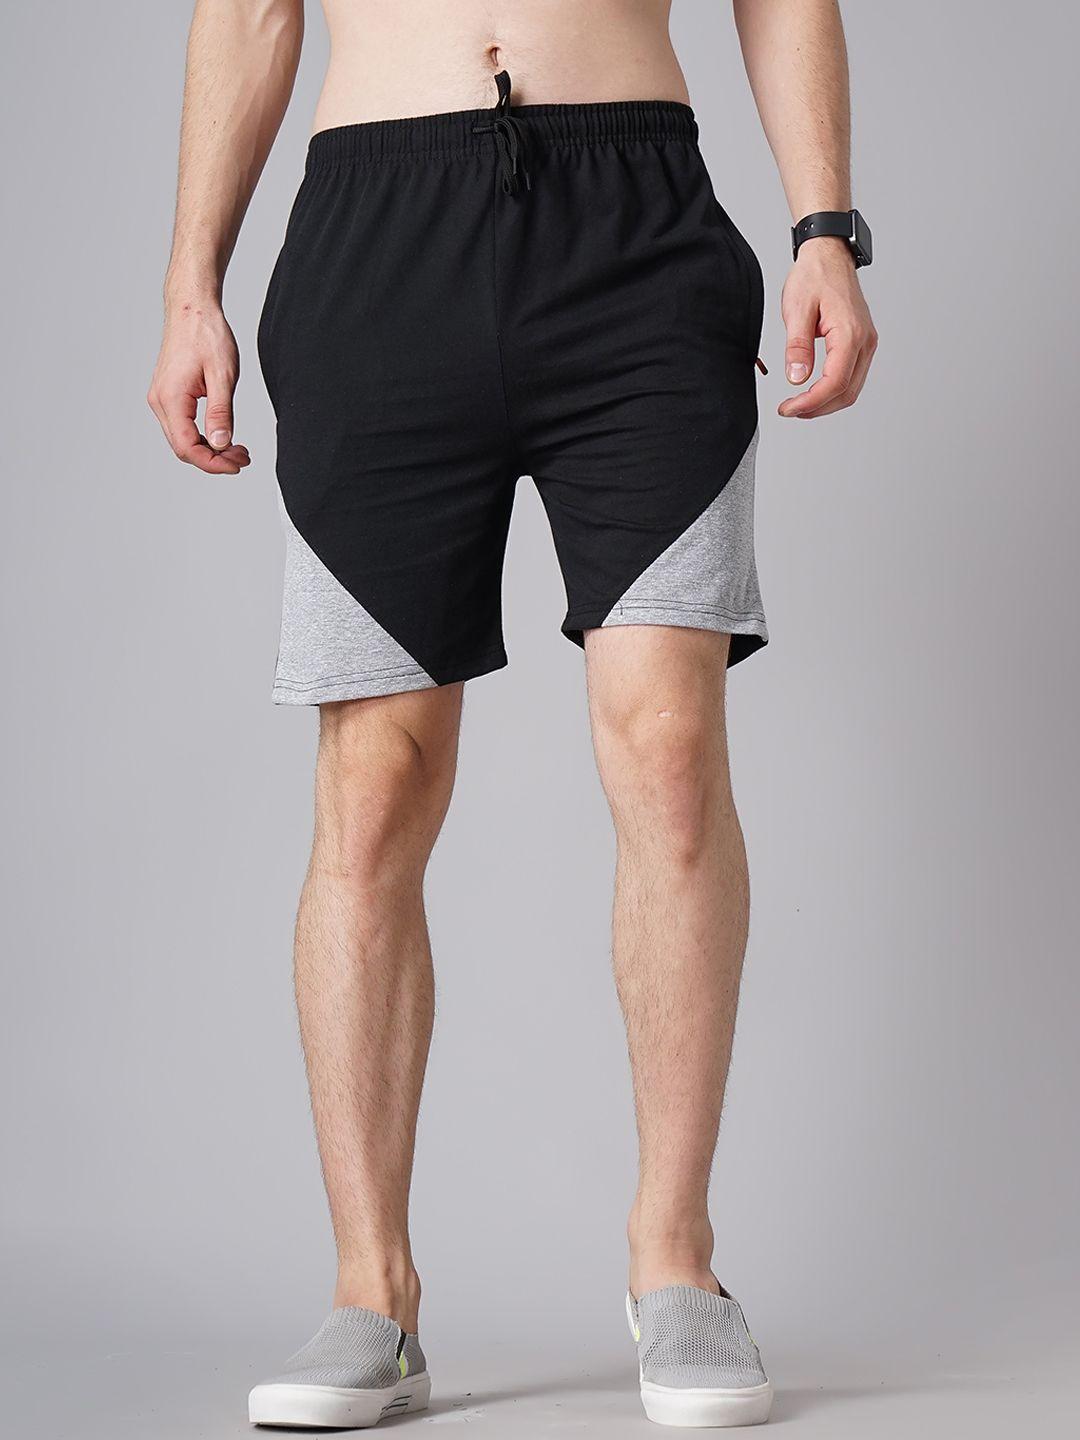 madsto plus size men slim fit cotton sports shorts